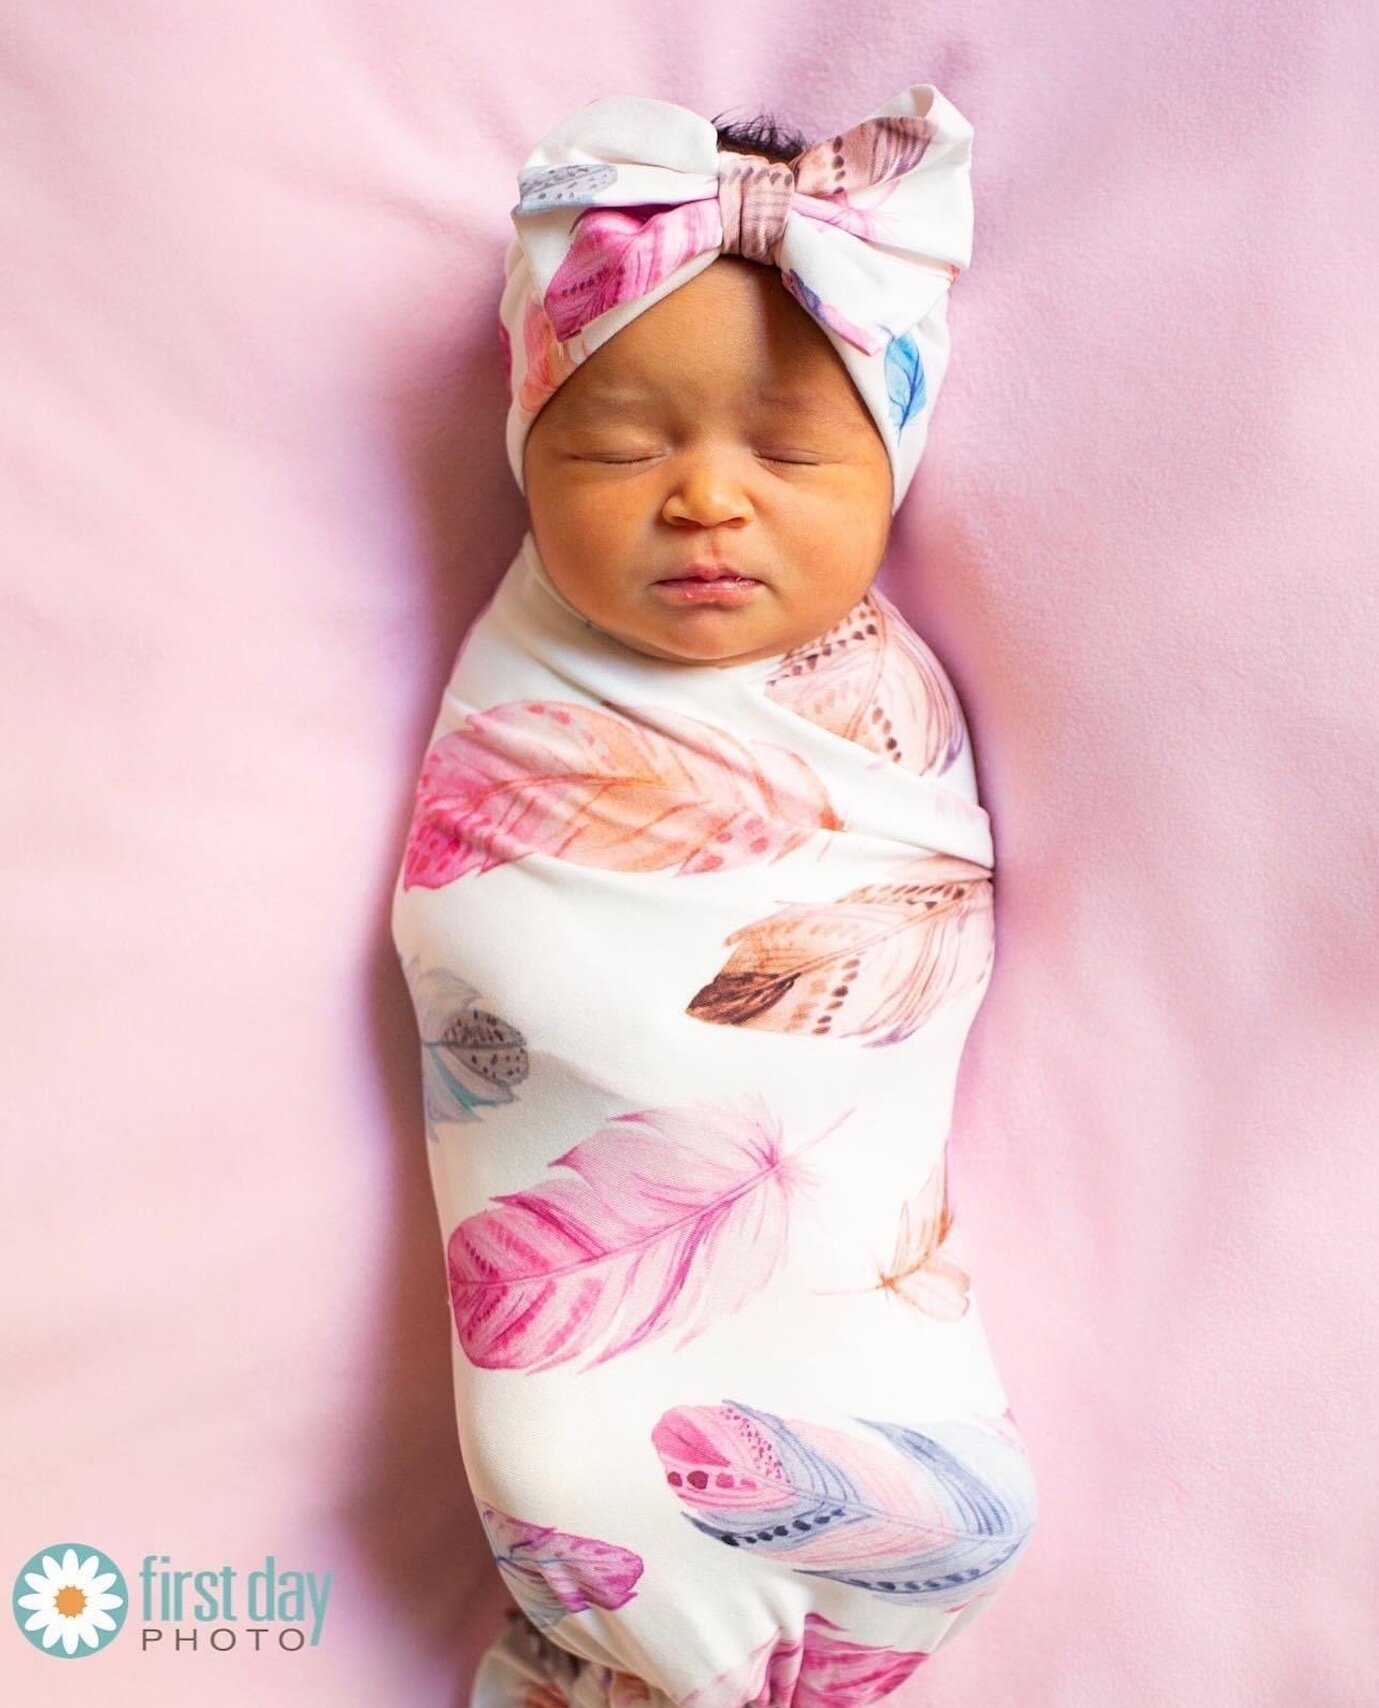 First Day Photo - Hospital Newborn Photography